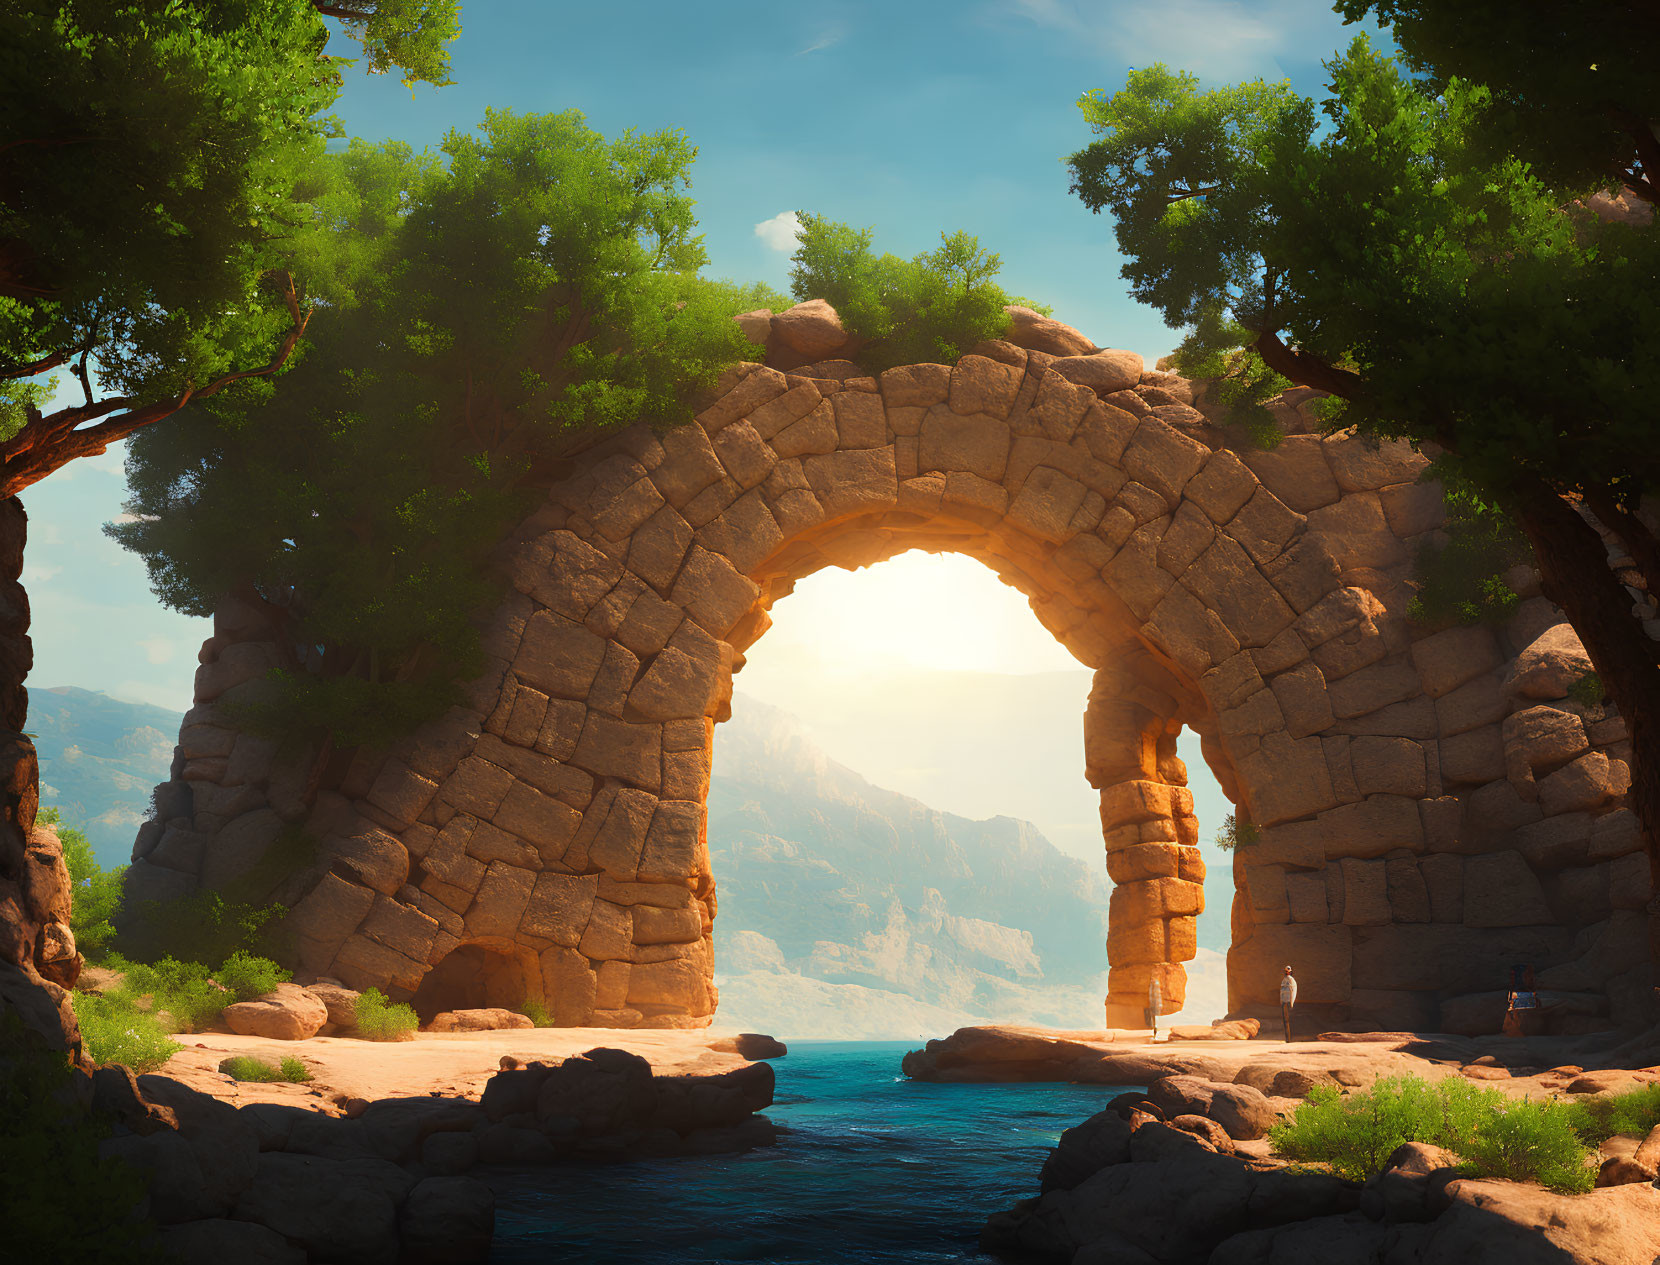 Ancient stone arch on lush coastal landscape under clear blue sky